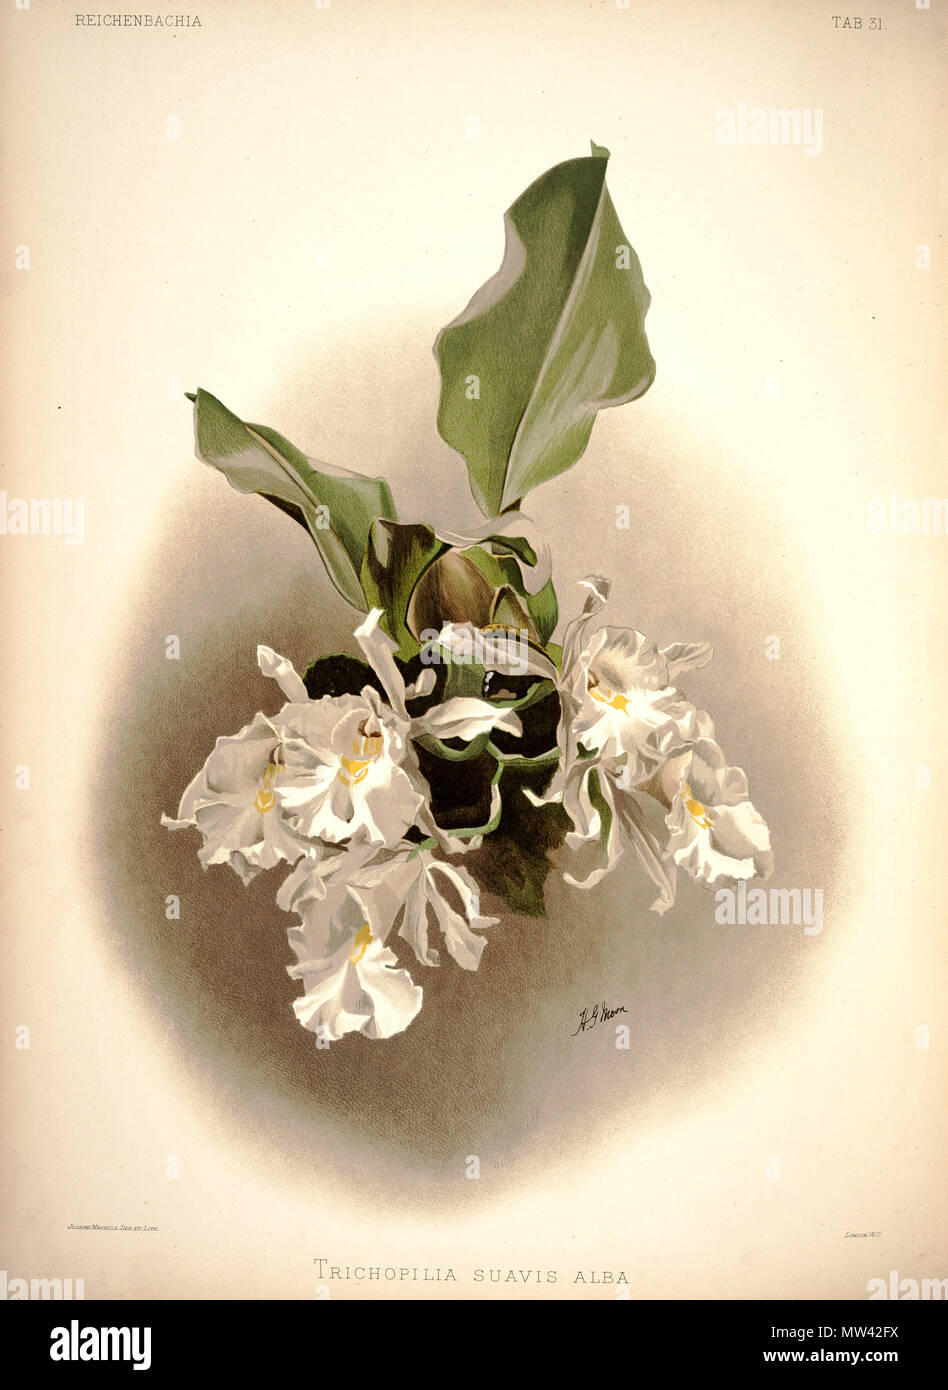 . Trichopilia suavis . between 1888 and 1894. H. Sotheran & Co., London (editor) 219 Frederick Sander - Reichenbachia I plate 31 (1888) - Trichopilia suavis alba Stock Photo